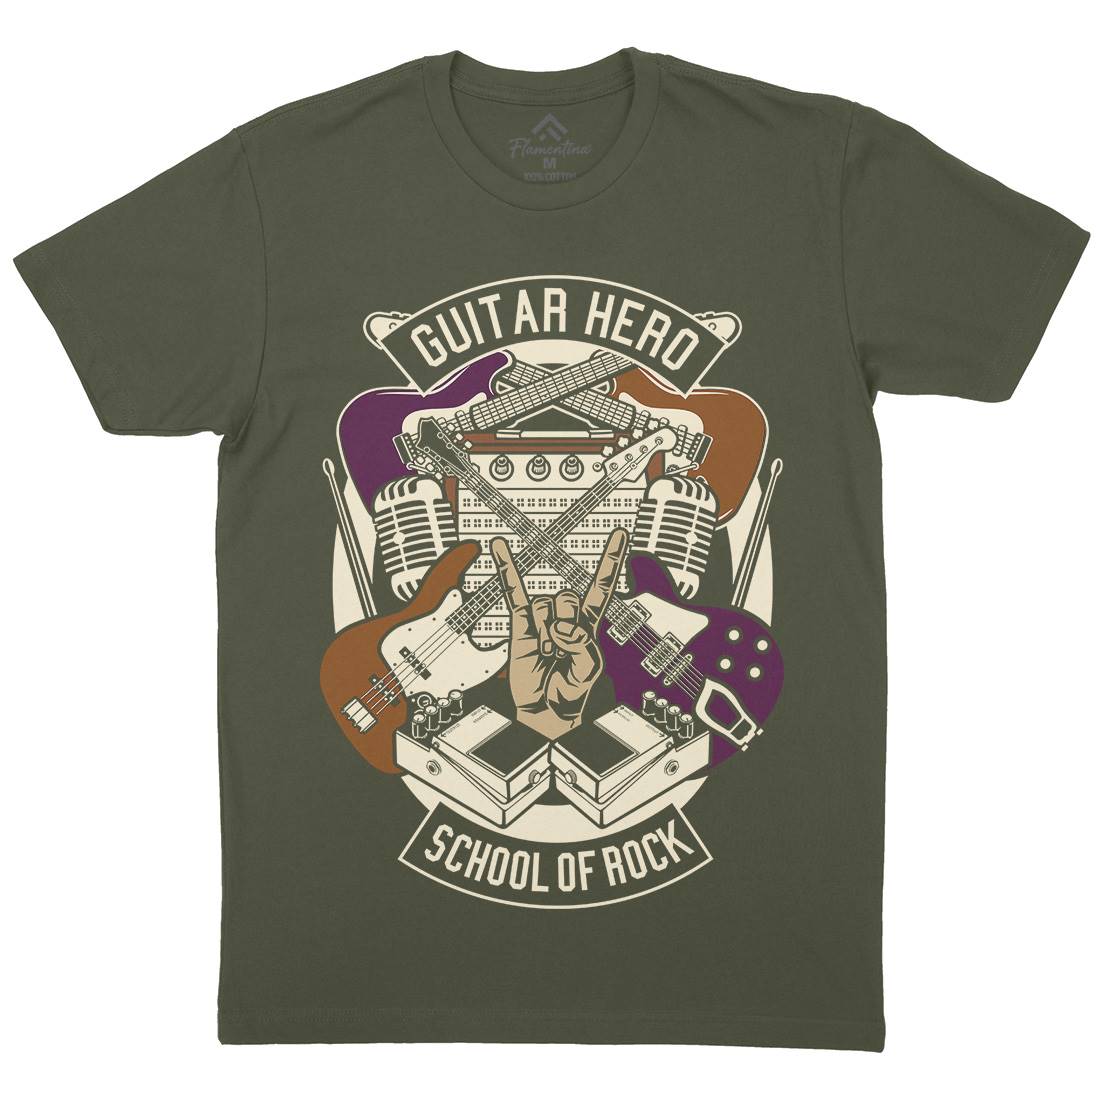 Guitar Hero Mens Organic Crew Neck T-Shirt Music D543